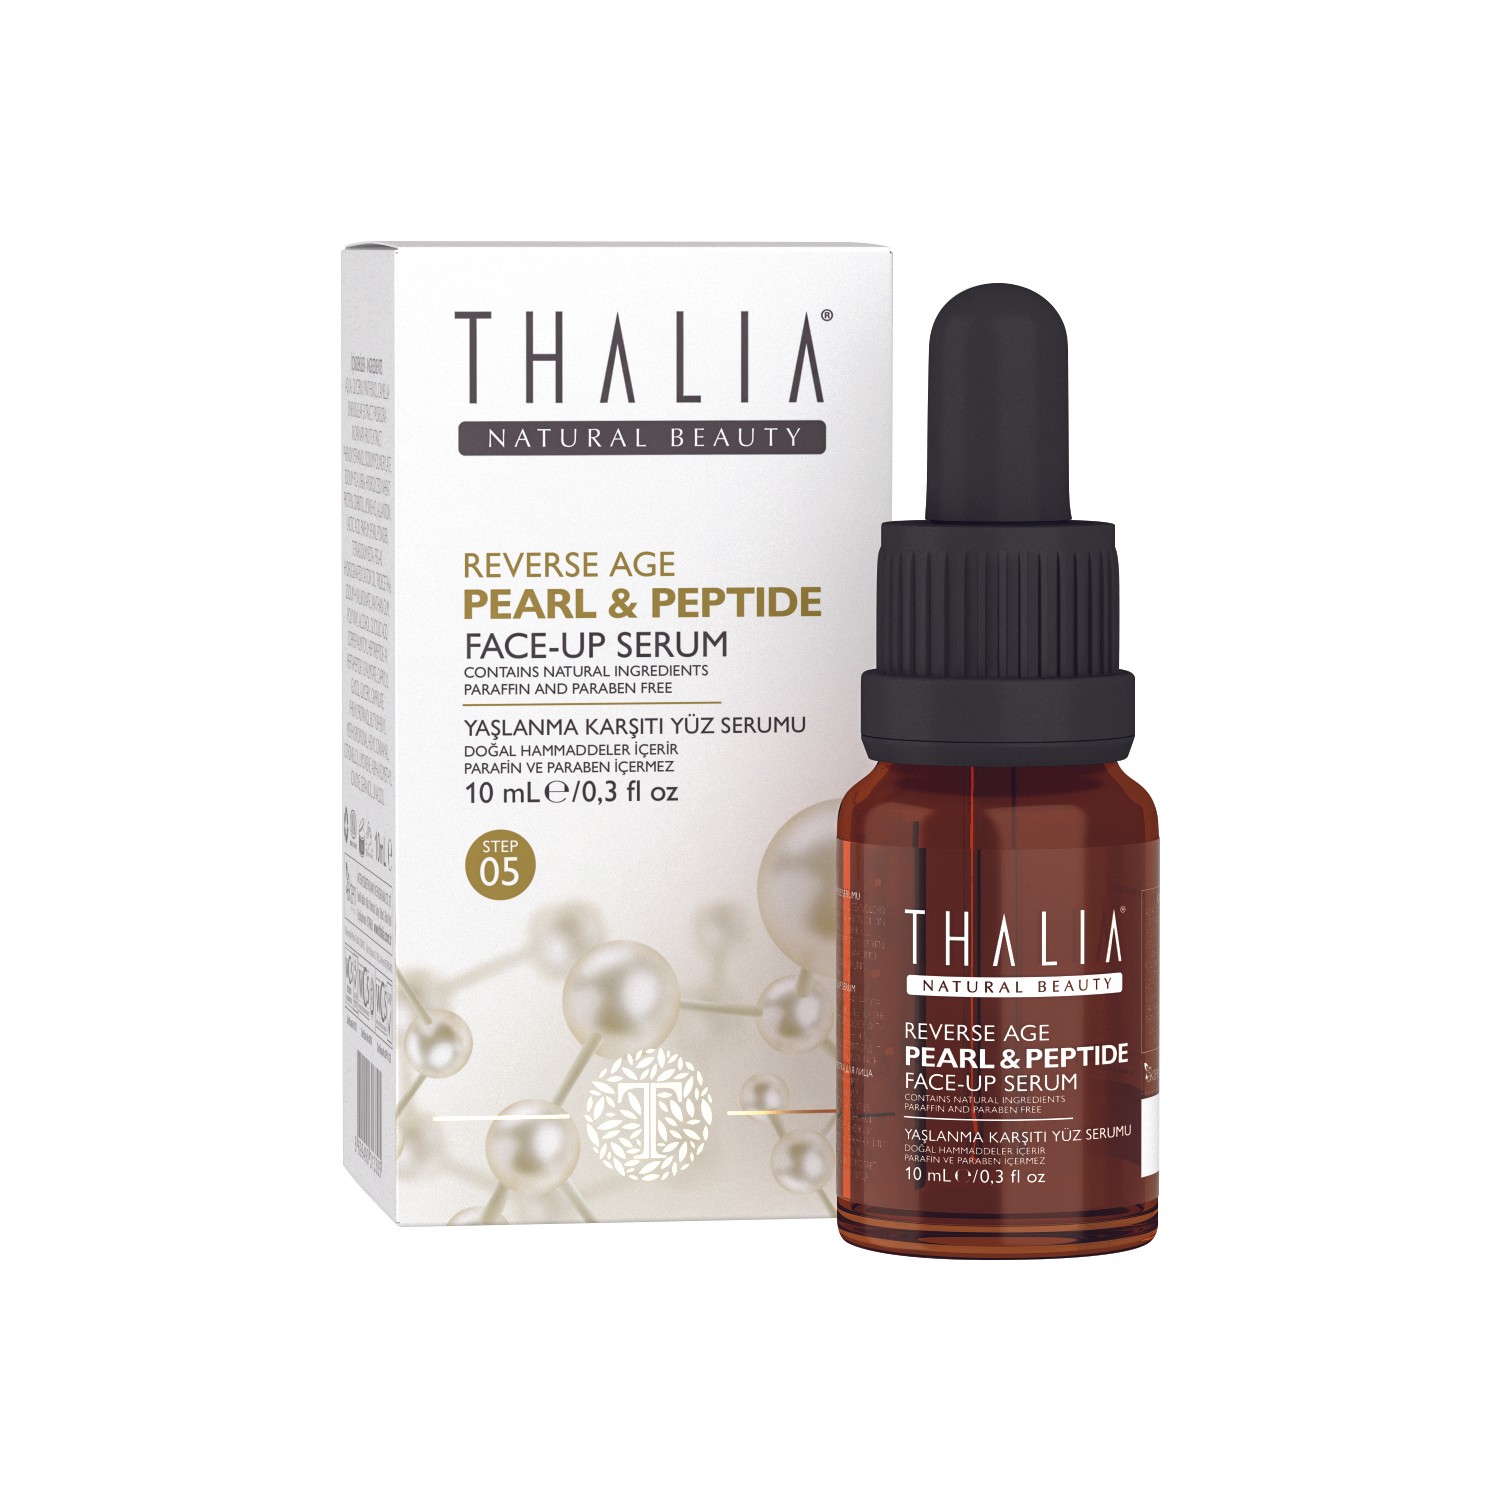 Омолаживающая сыворотка для лица Thalia Pearl & Peptide 40+, 10 мл крем антивозрастной для лица thalia natural beauty age pearl